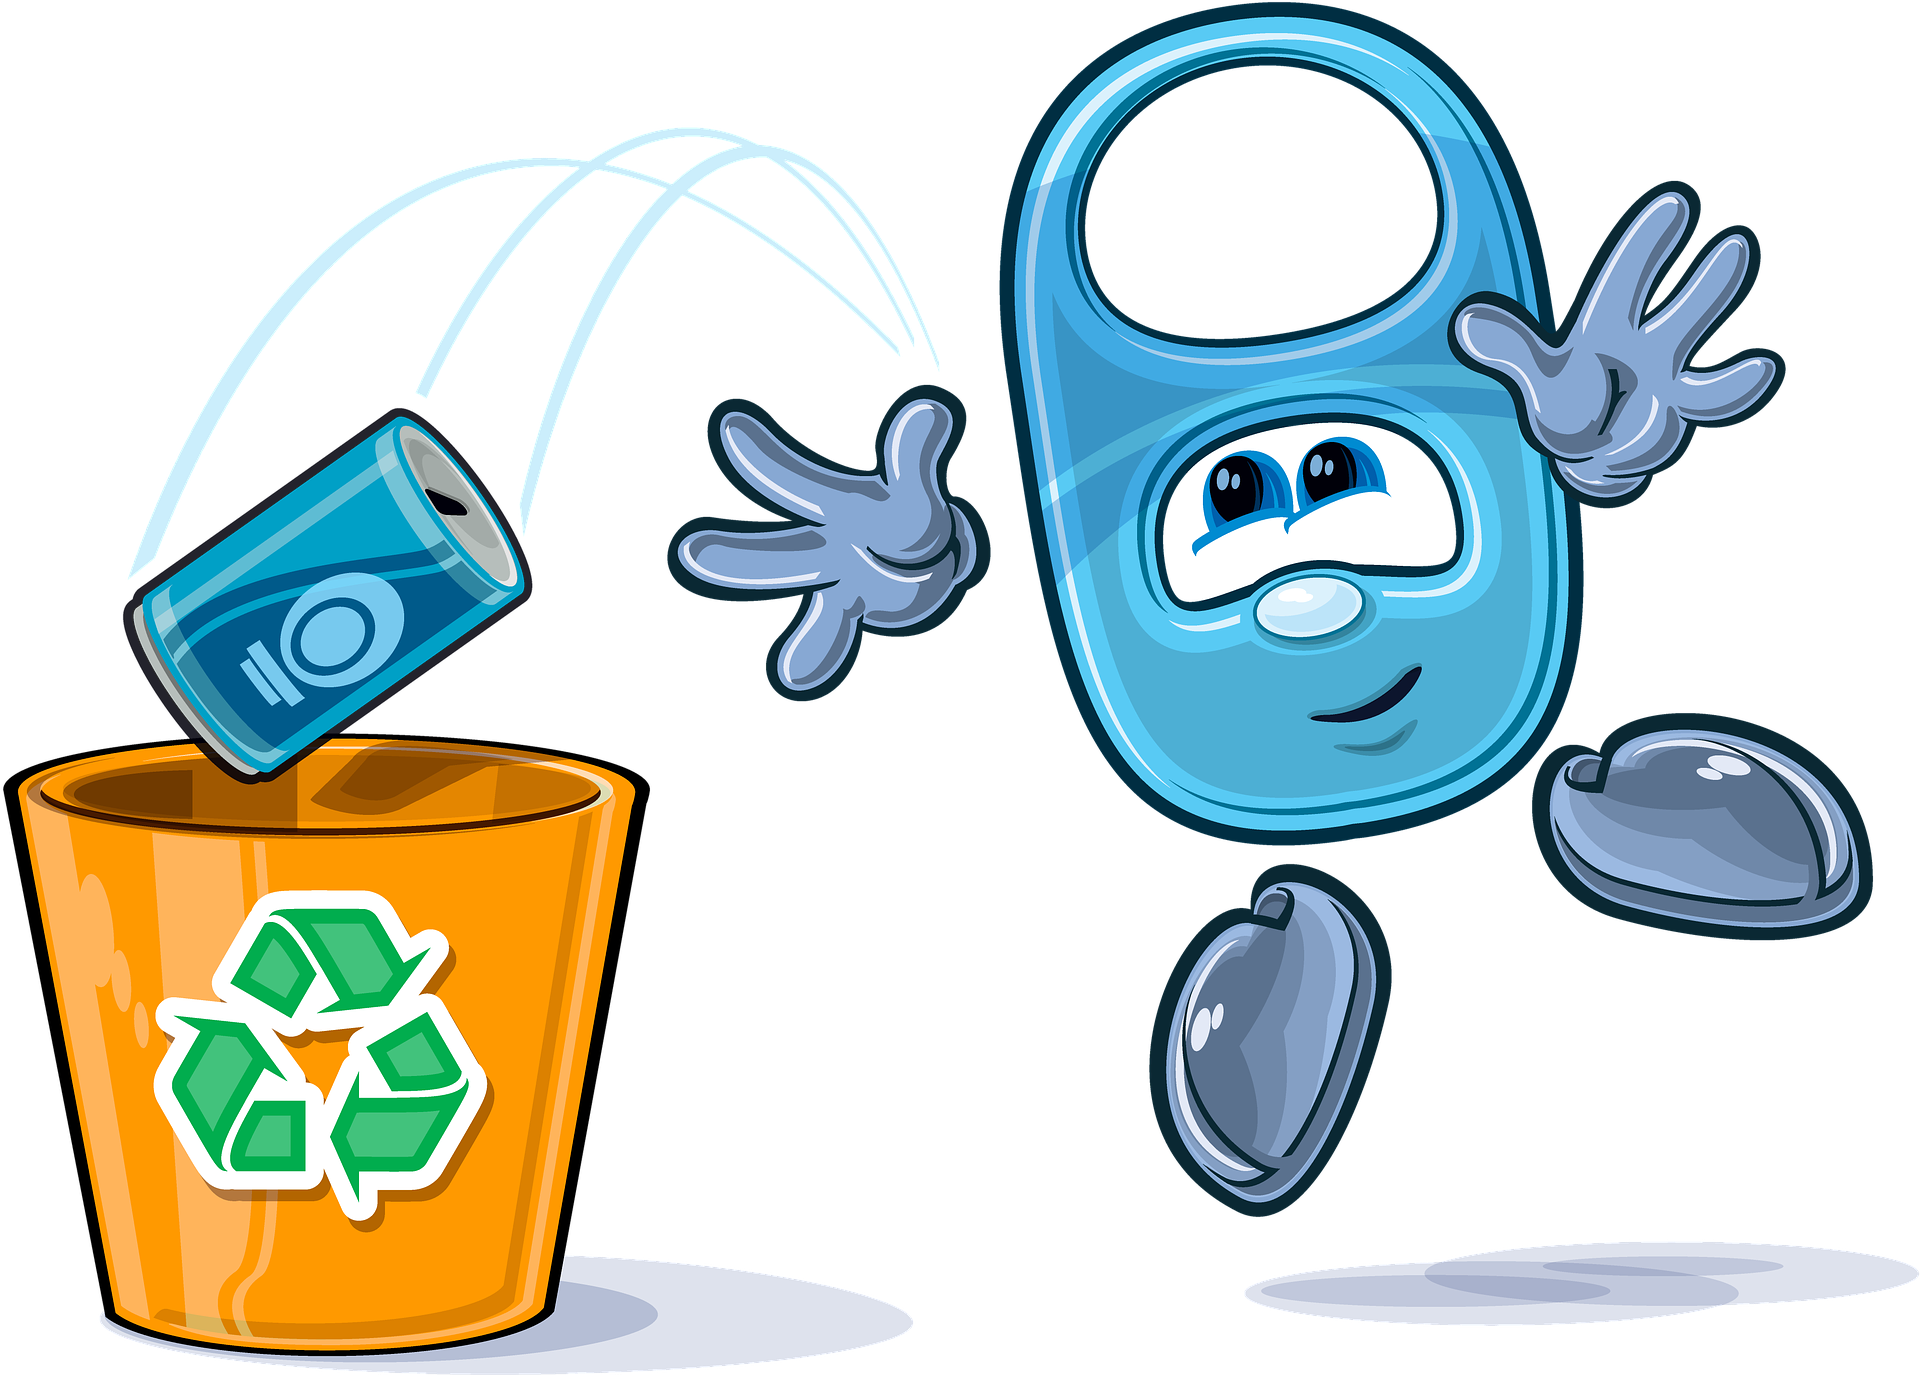 Cartoon: Recycling, wastepaper, bin, garbage, funny